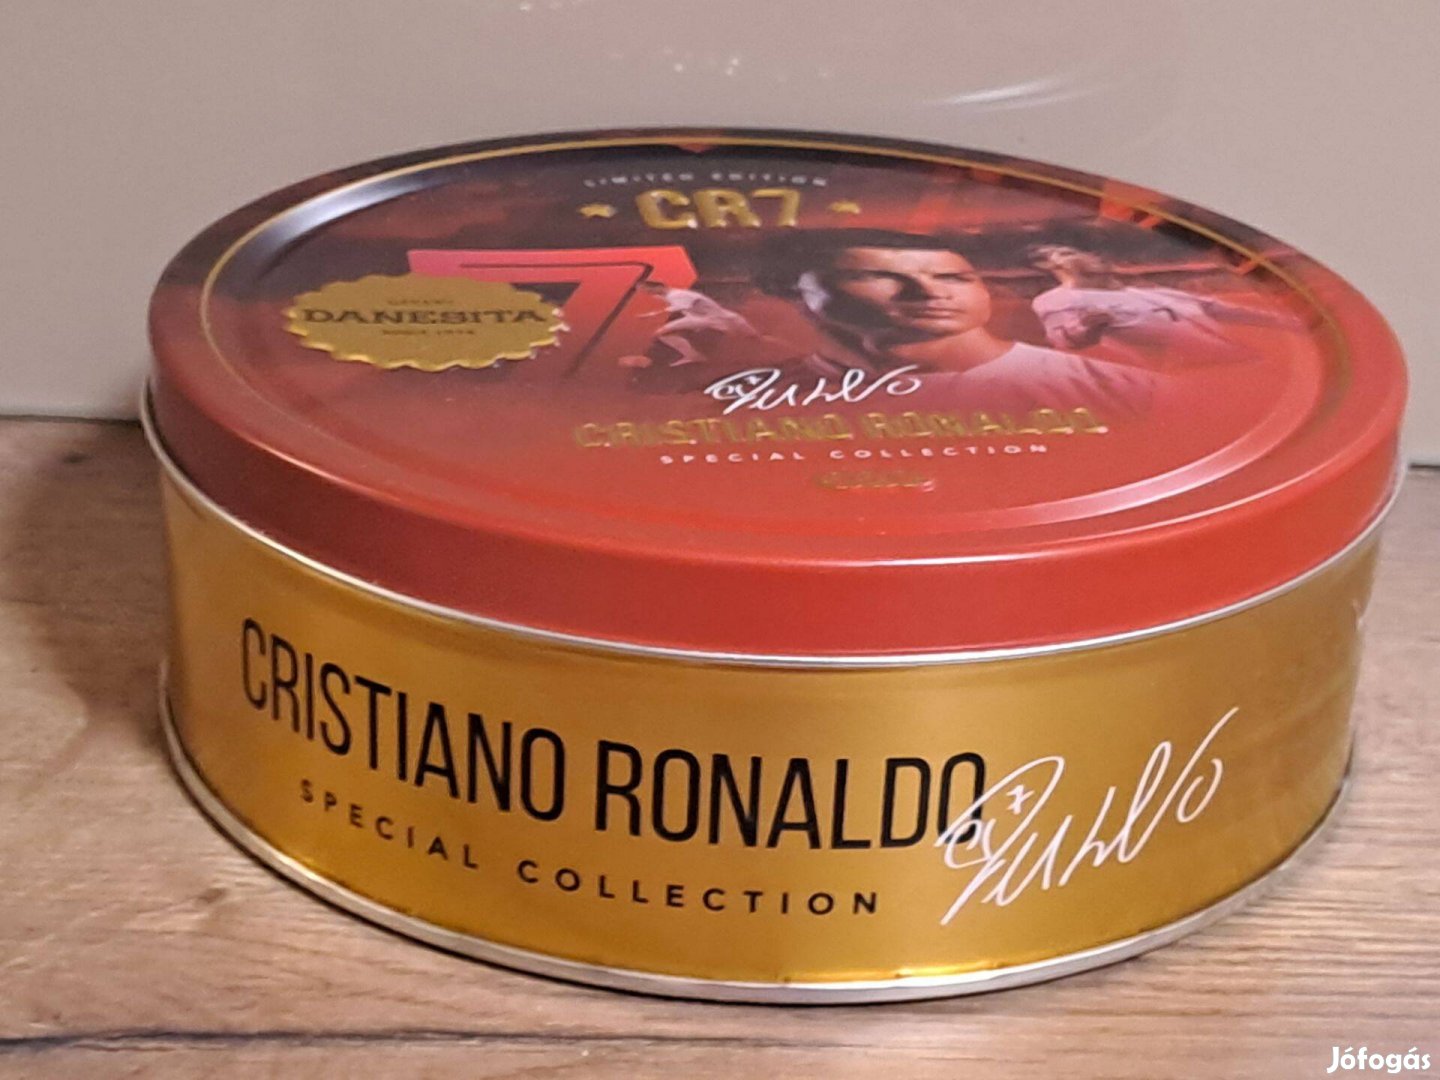 Christiano Ronaldo fémdoboz,díszdoboz